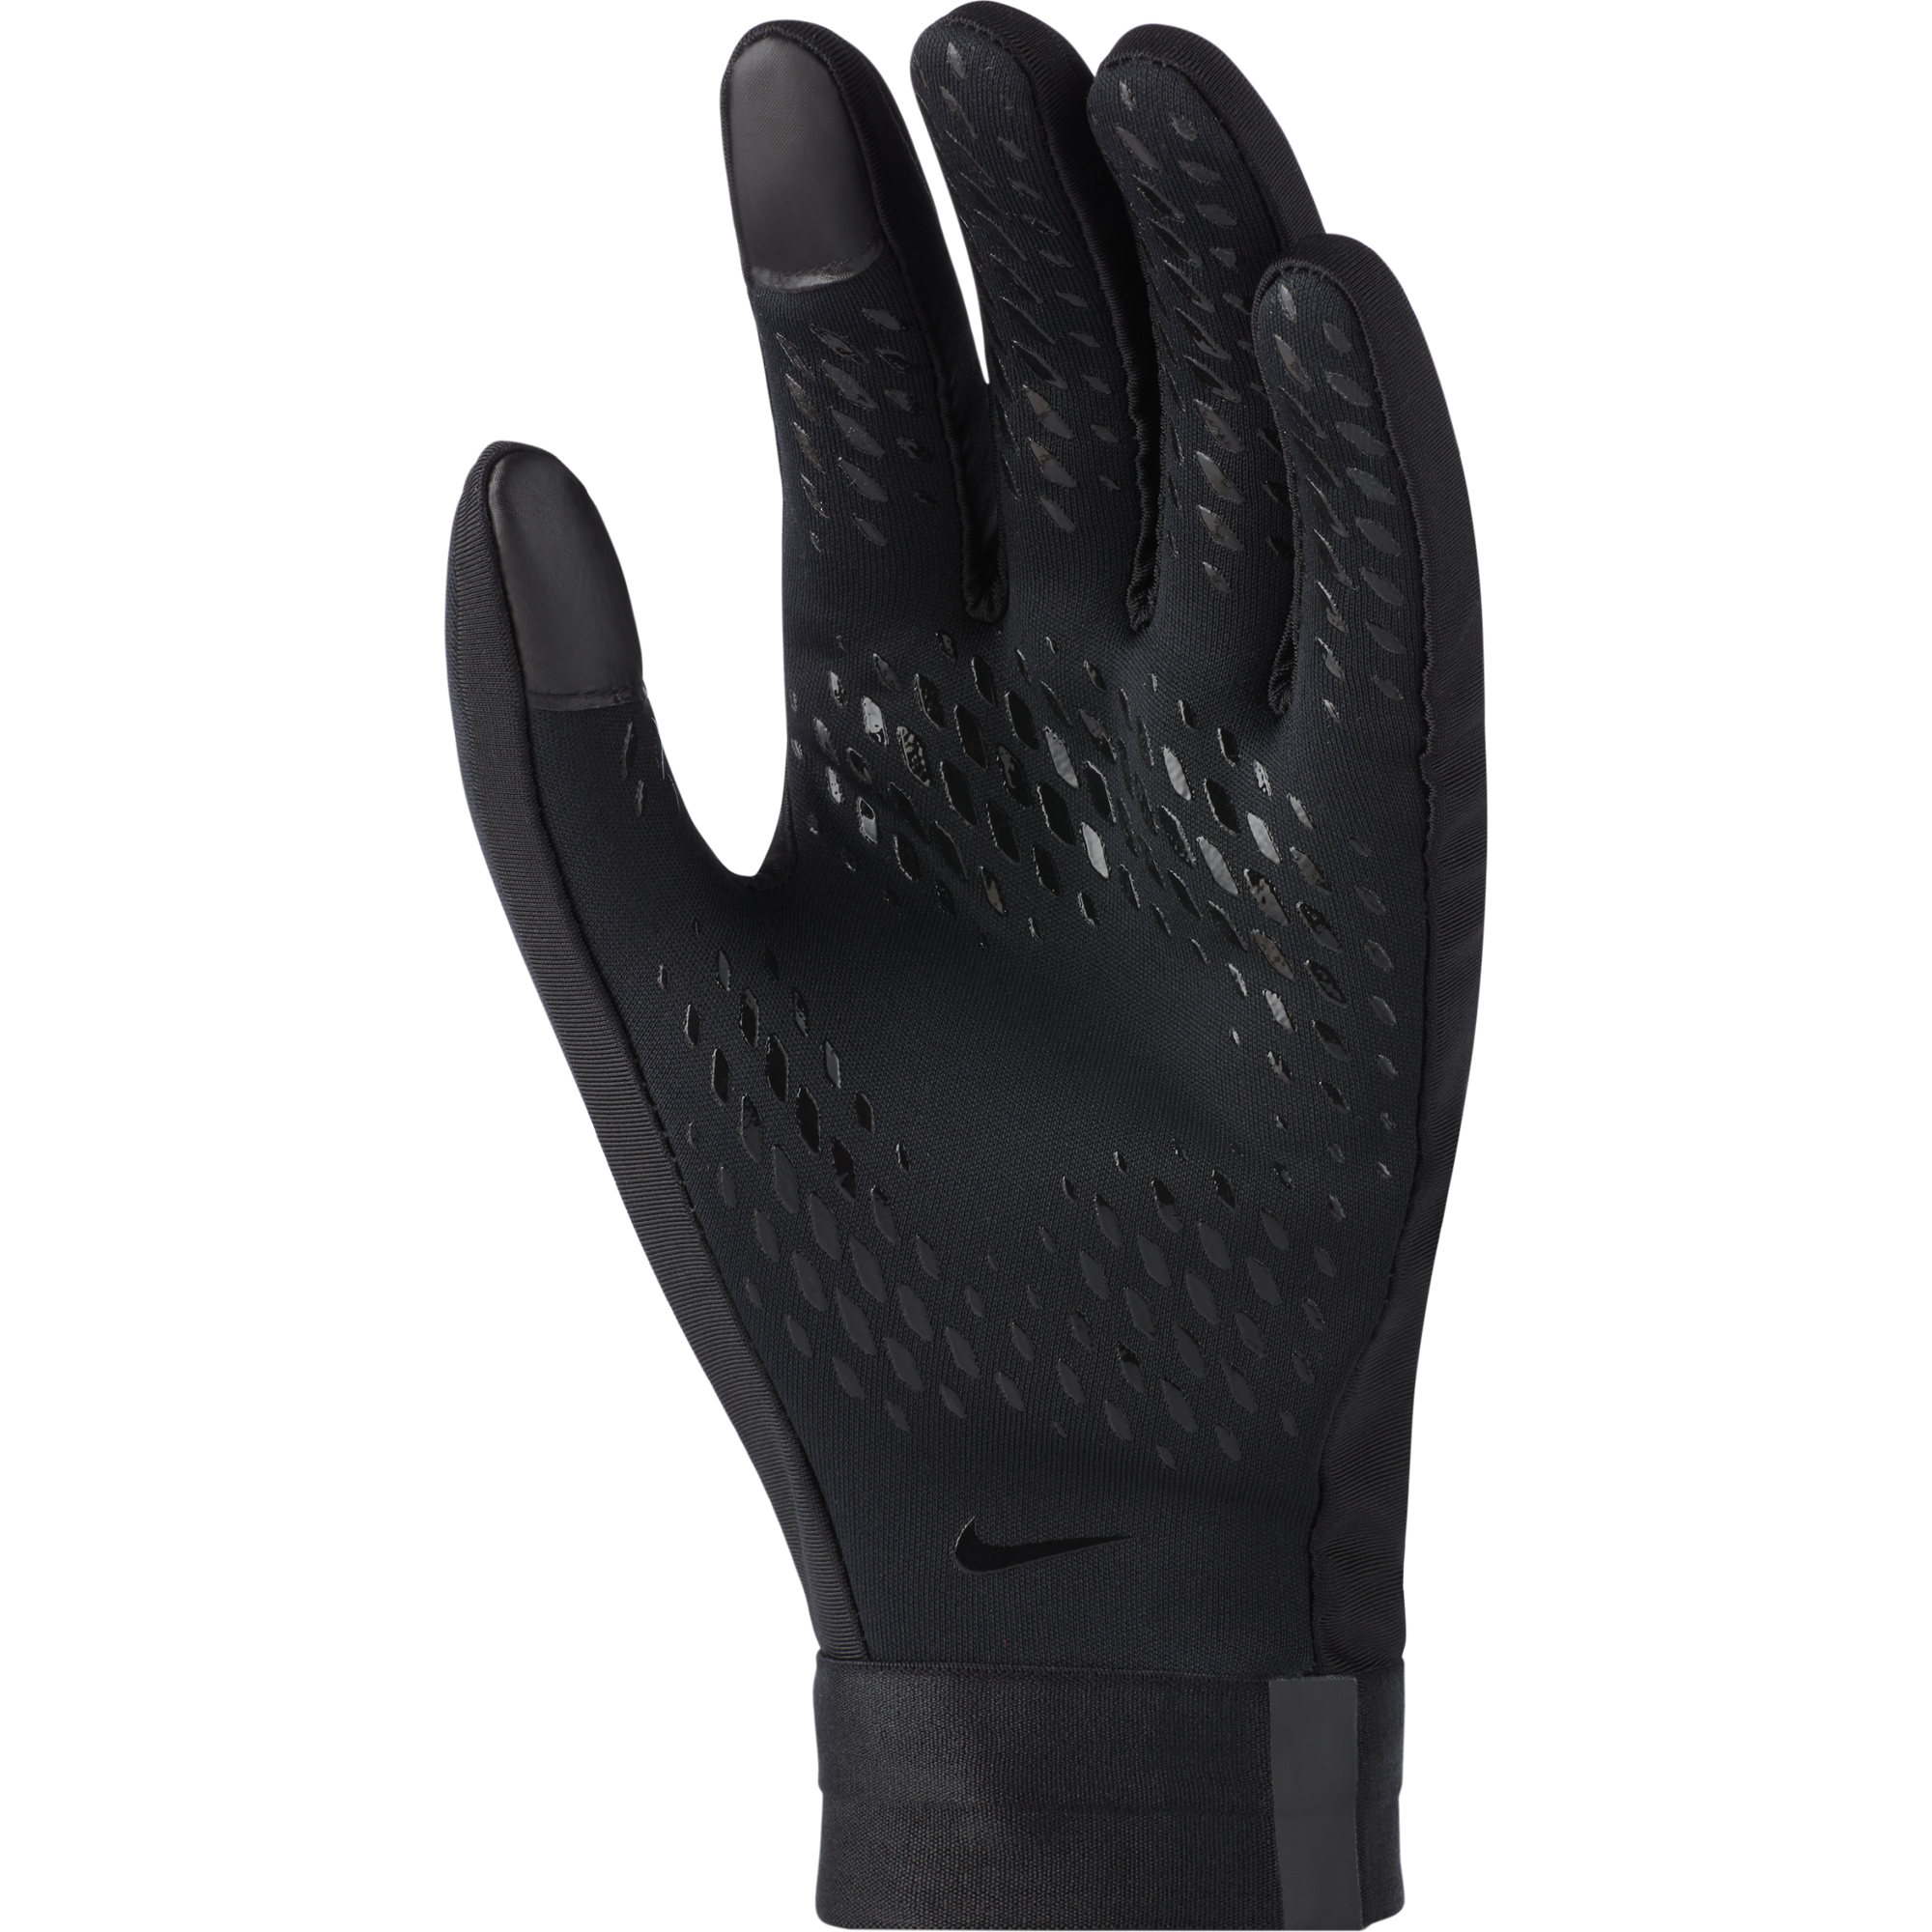 Hyper Warm Academy Football Gloves